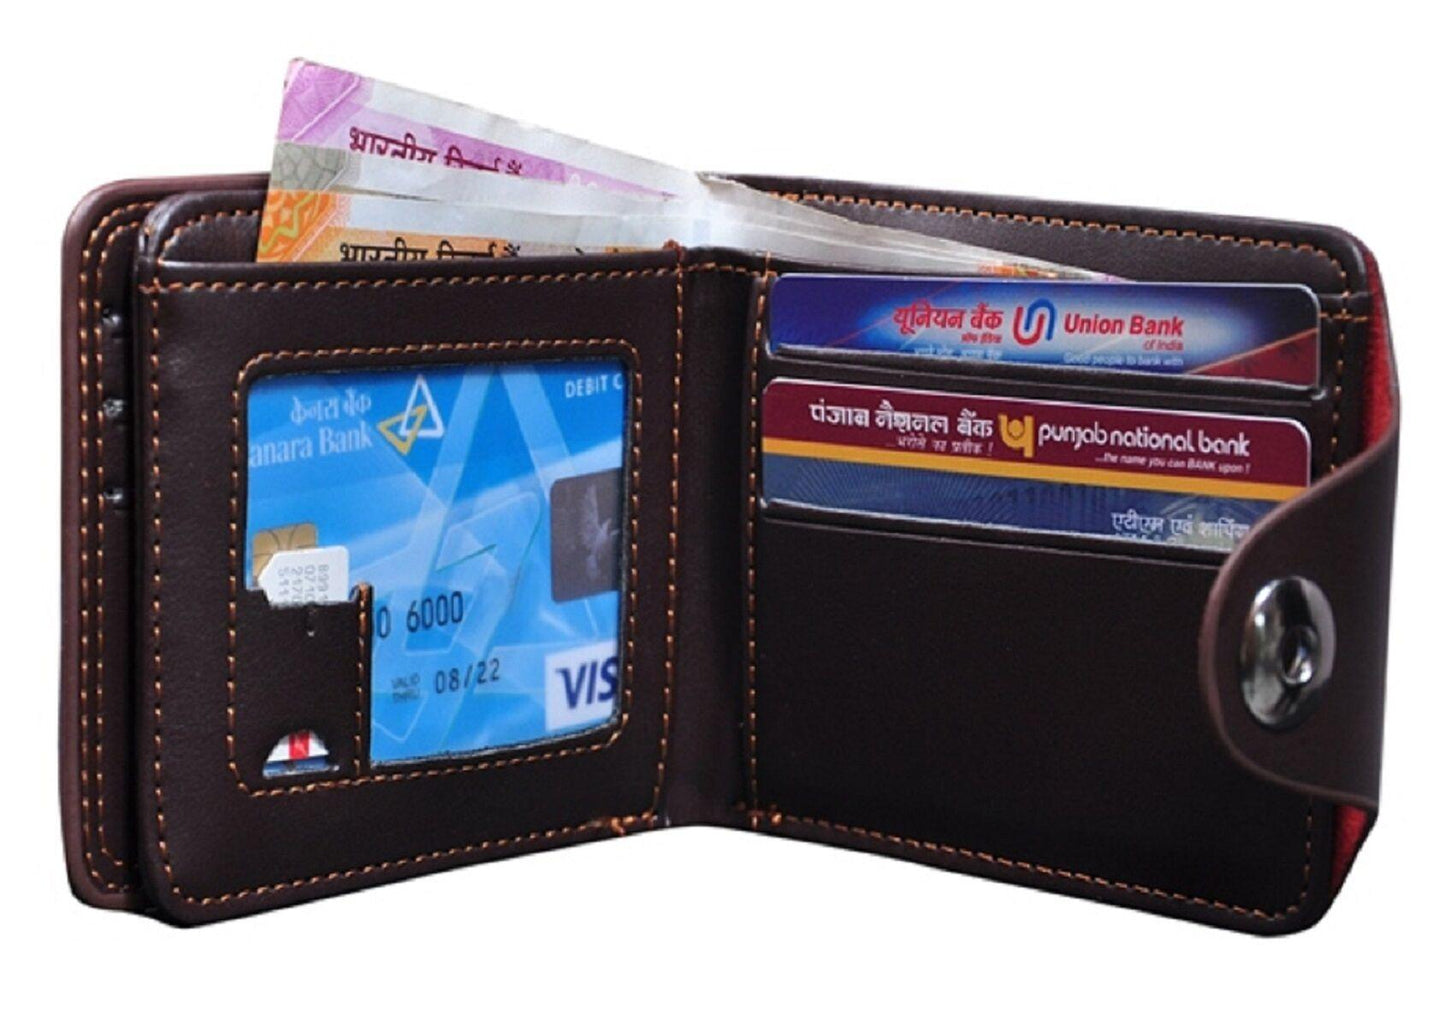 Men's Artificial Leather Wallet